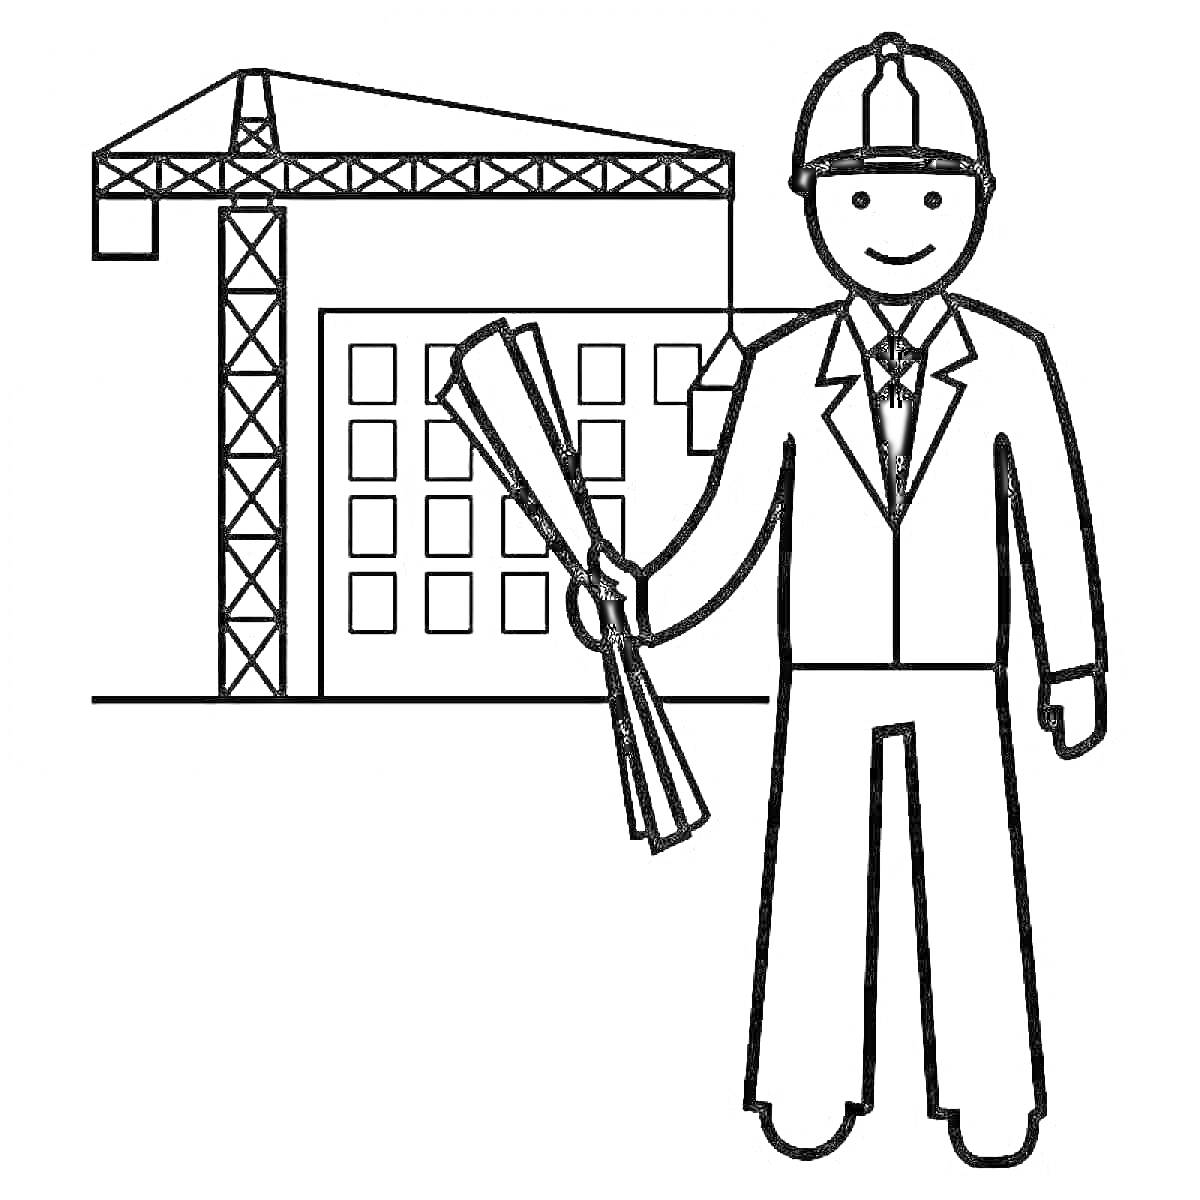 Раскраска Инженер на фоне стройки с краном и зданием, с чертежами в руках